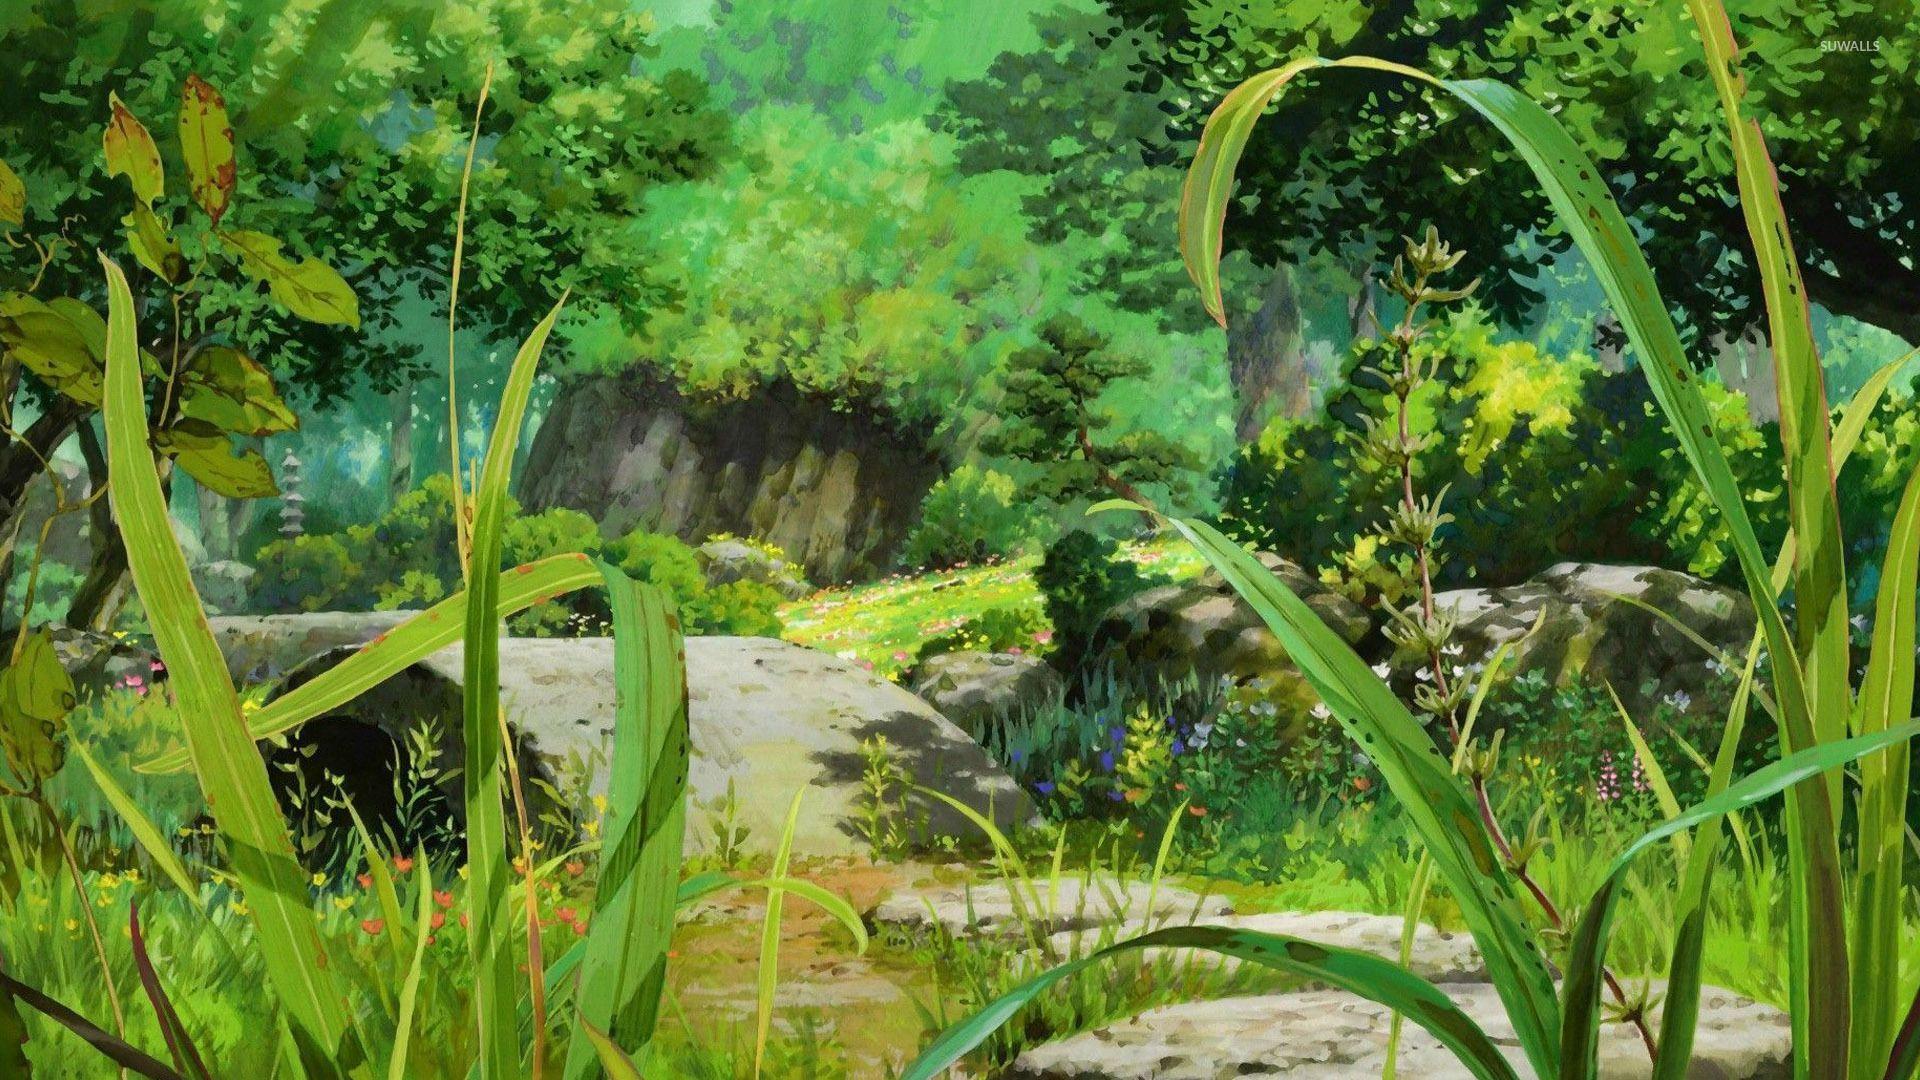 Anime forest background Vectors & Illustrations for Free Download | Freepik